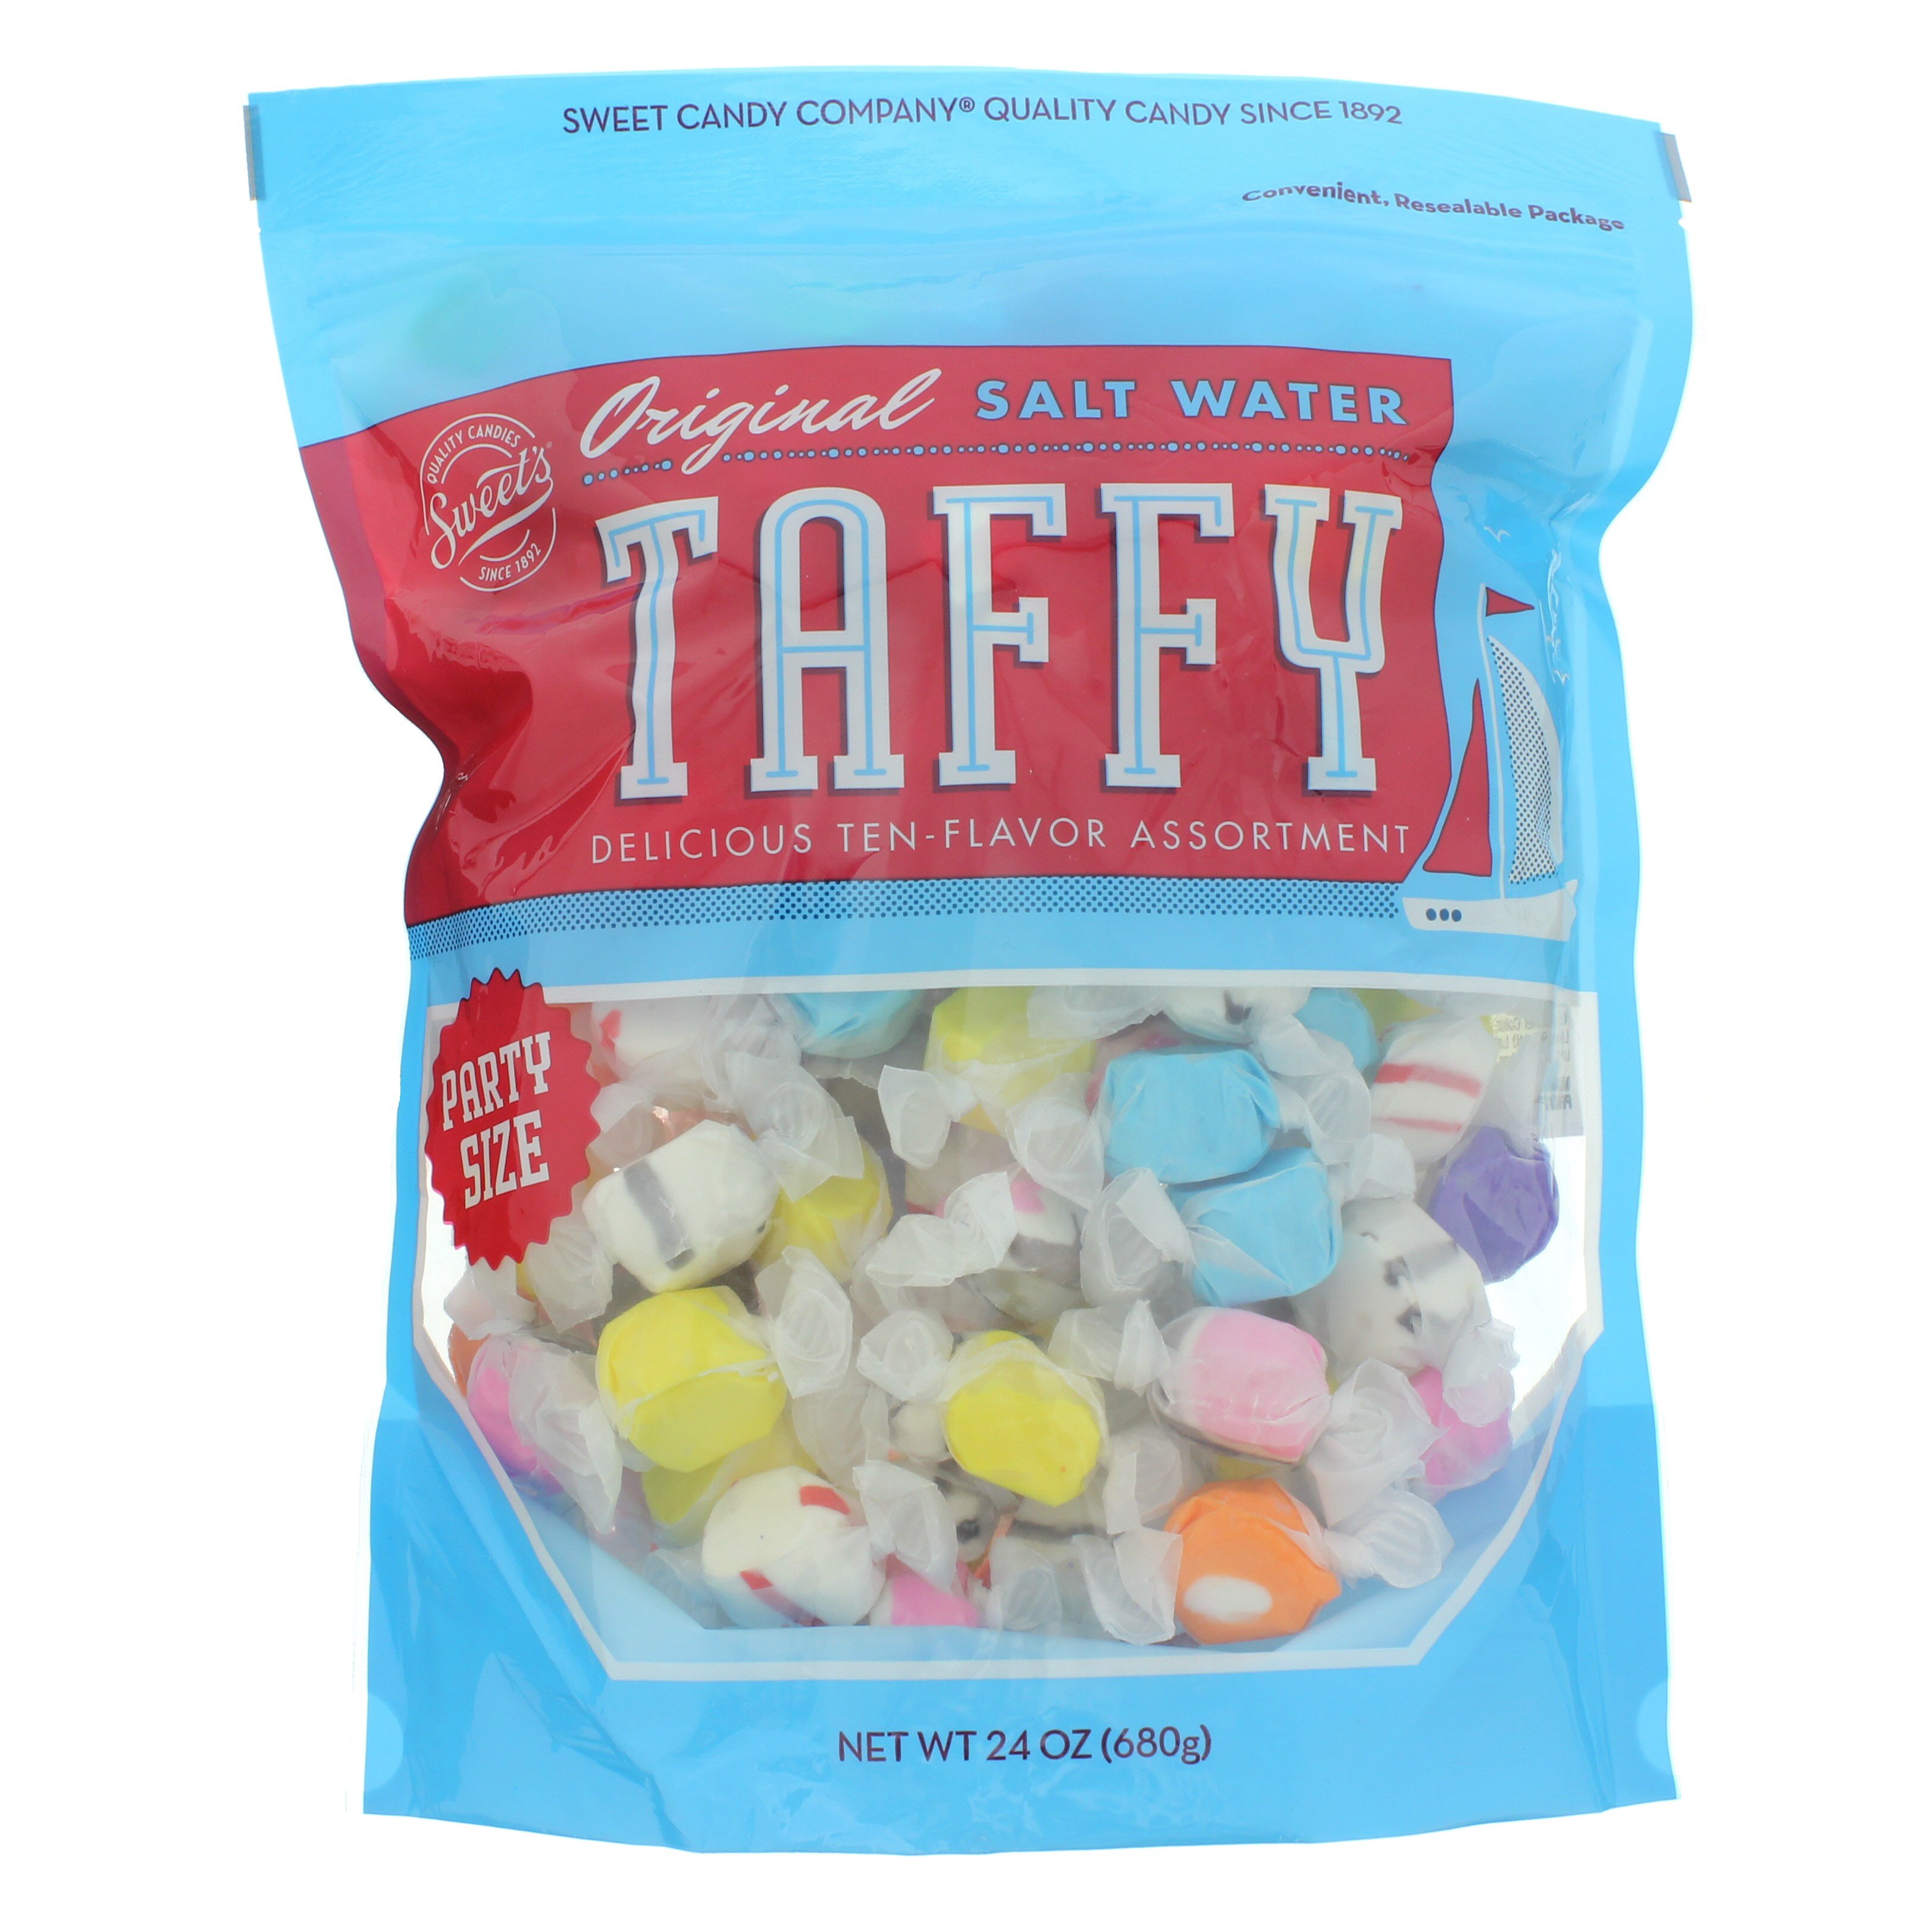 Sweet's Original Salt Water Taffy Shop Candy at HEB